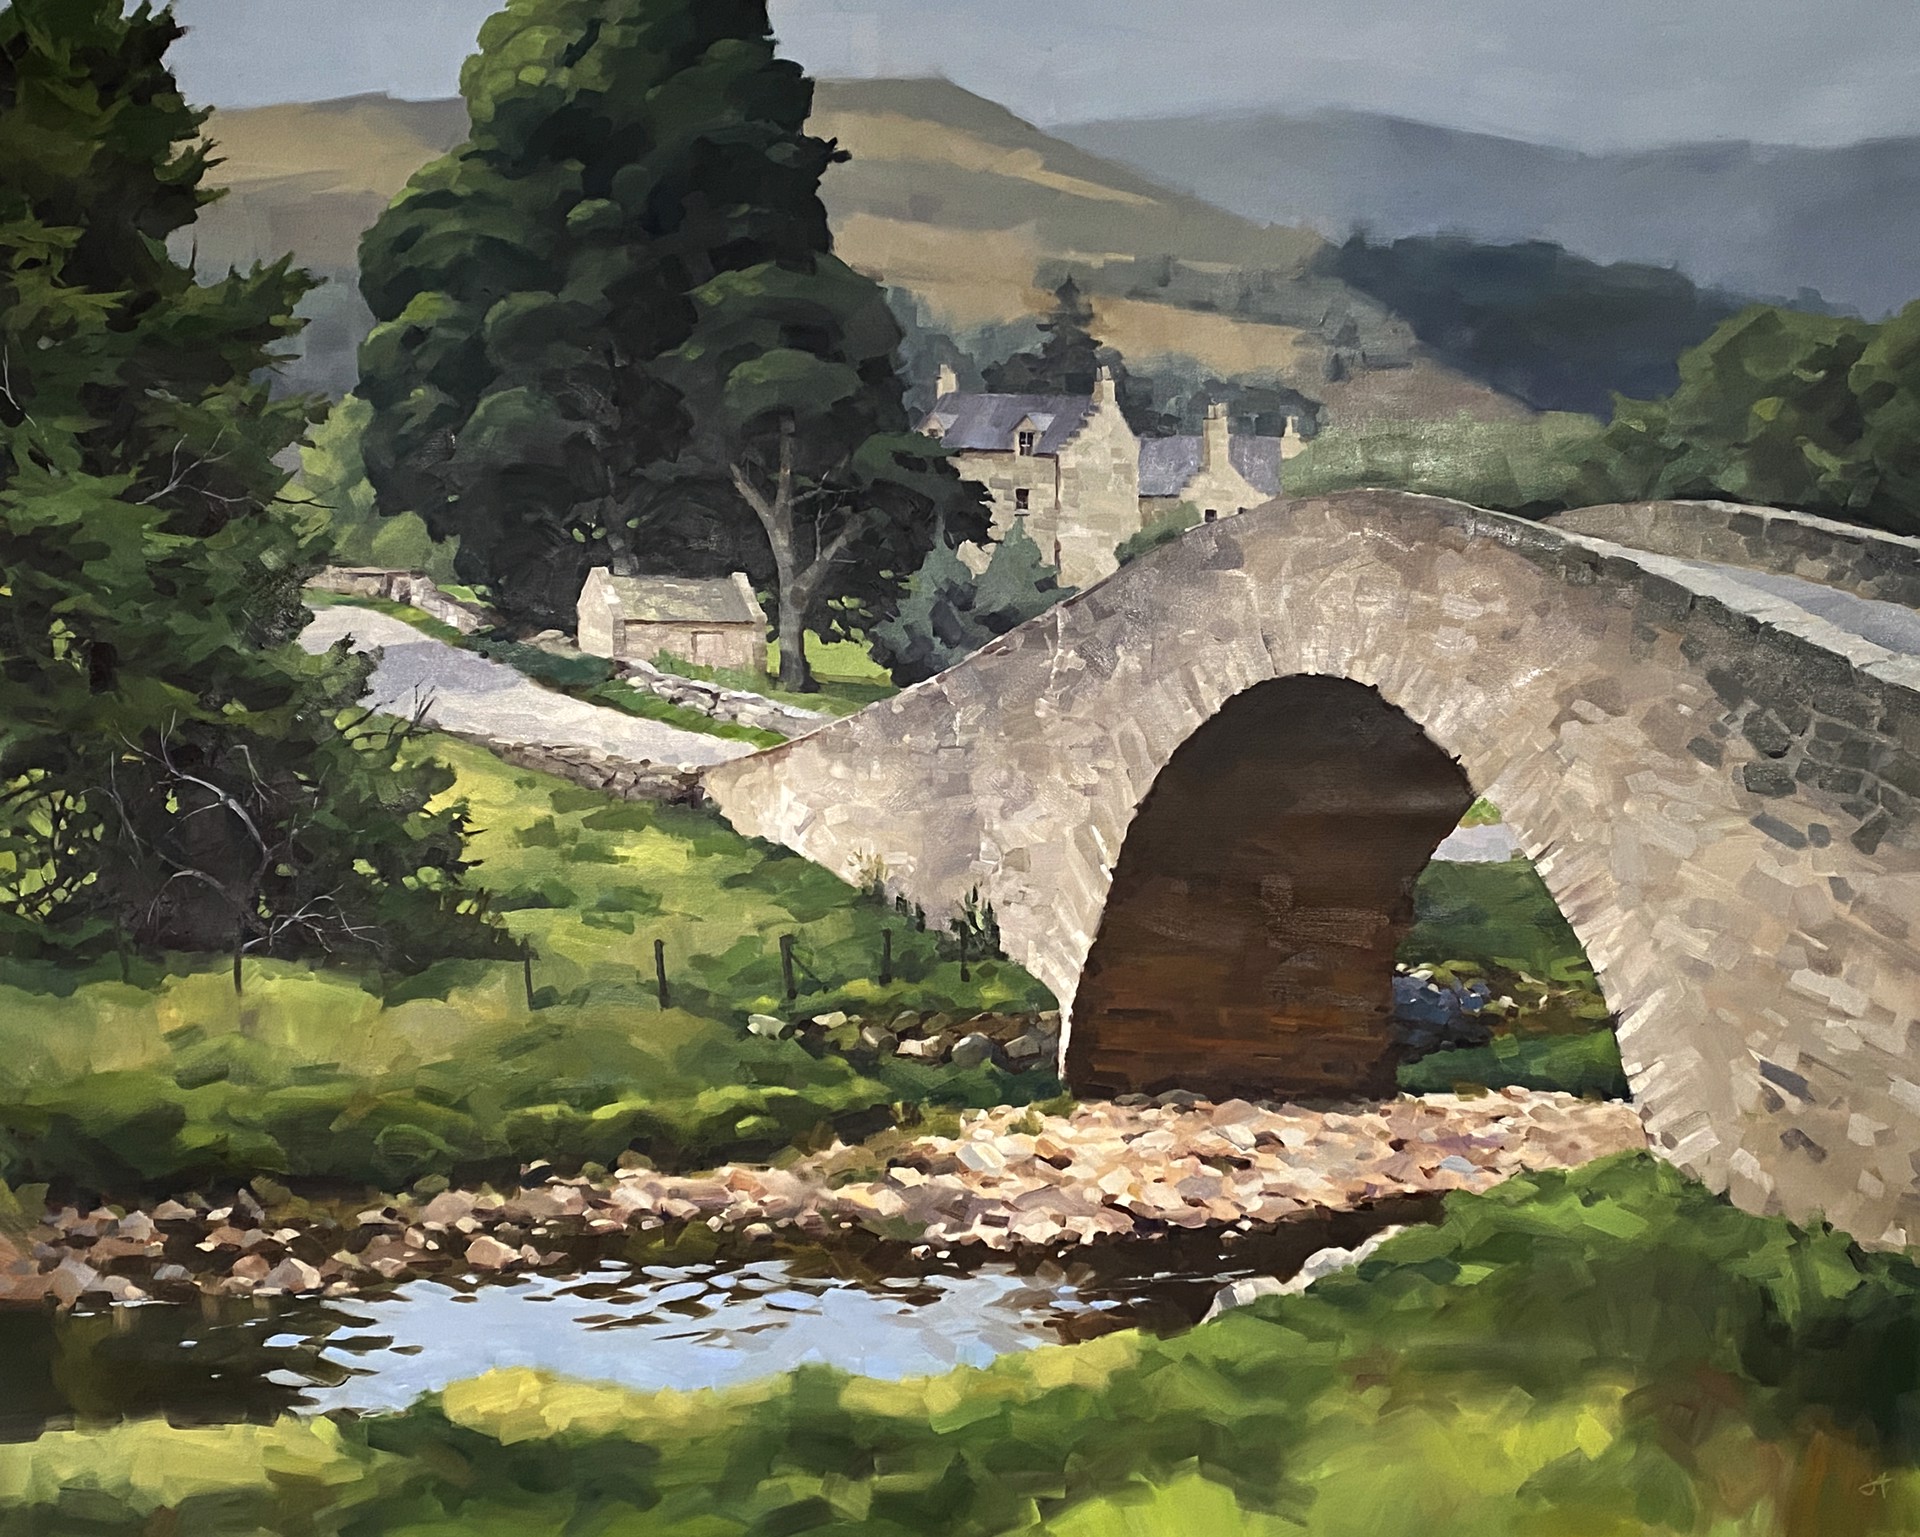 Gairnshiel Bridge, 2021 by Judd Mercer